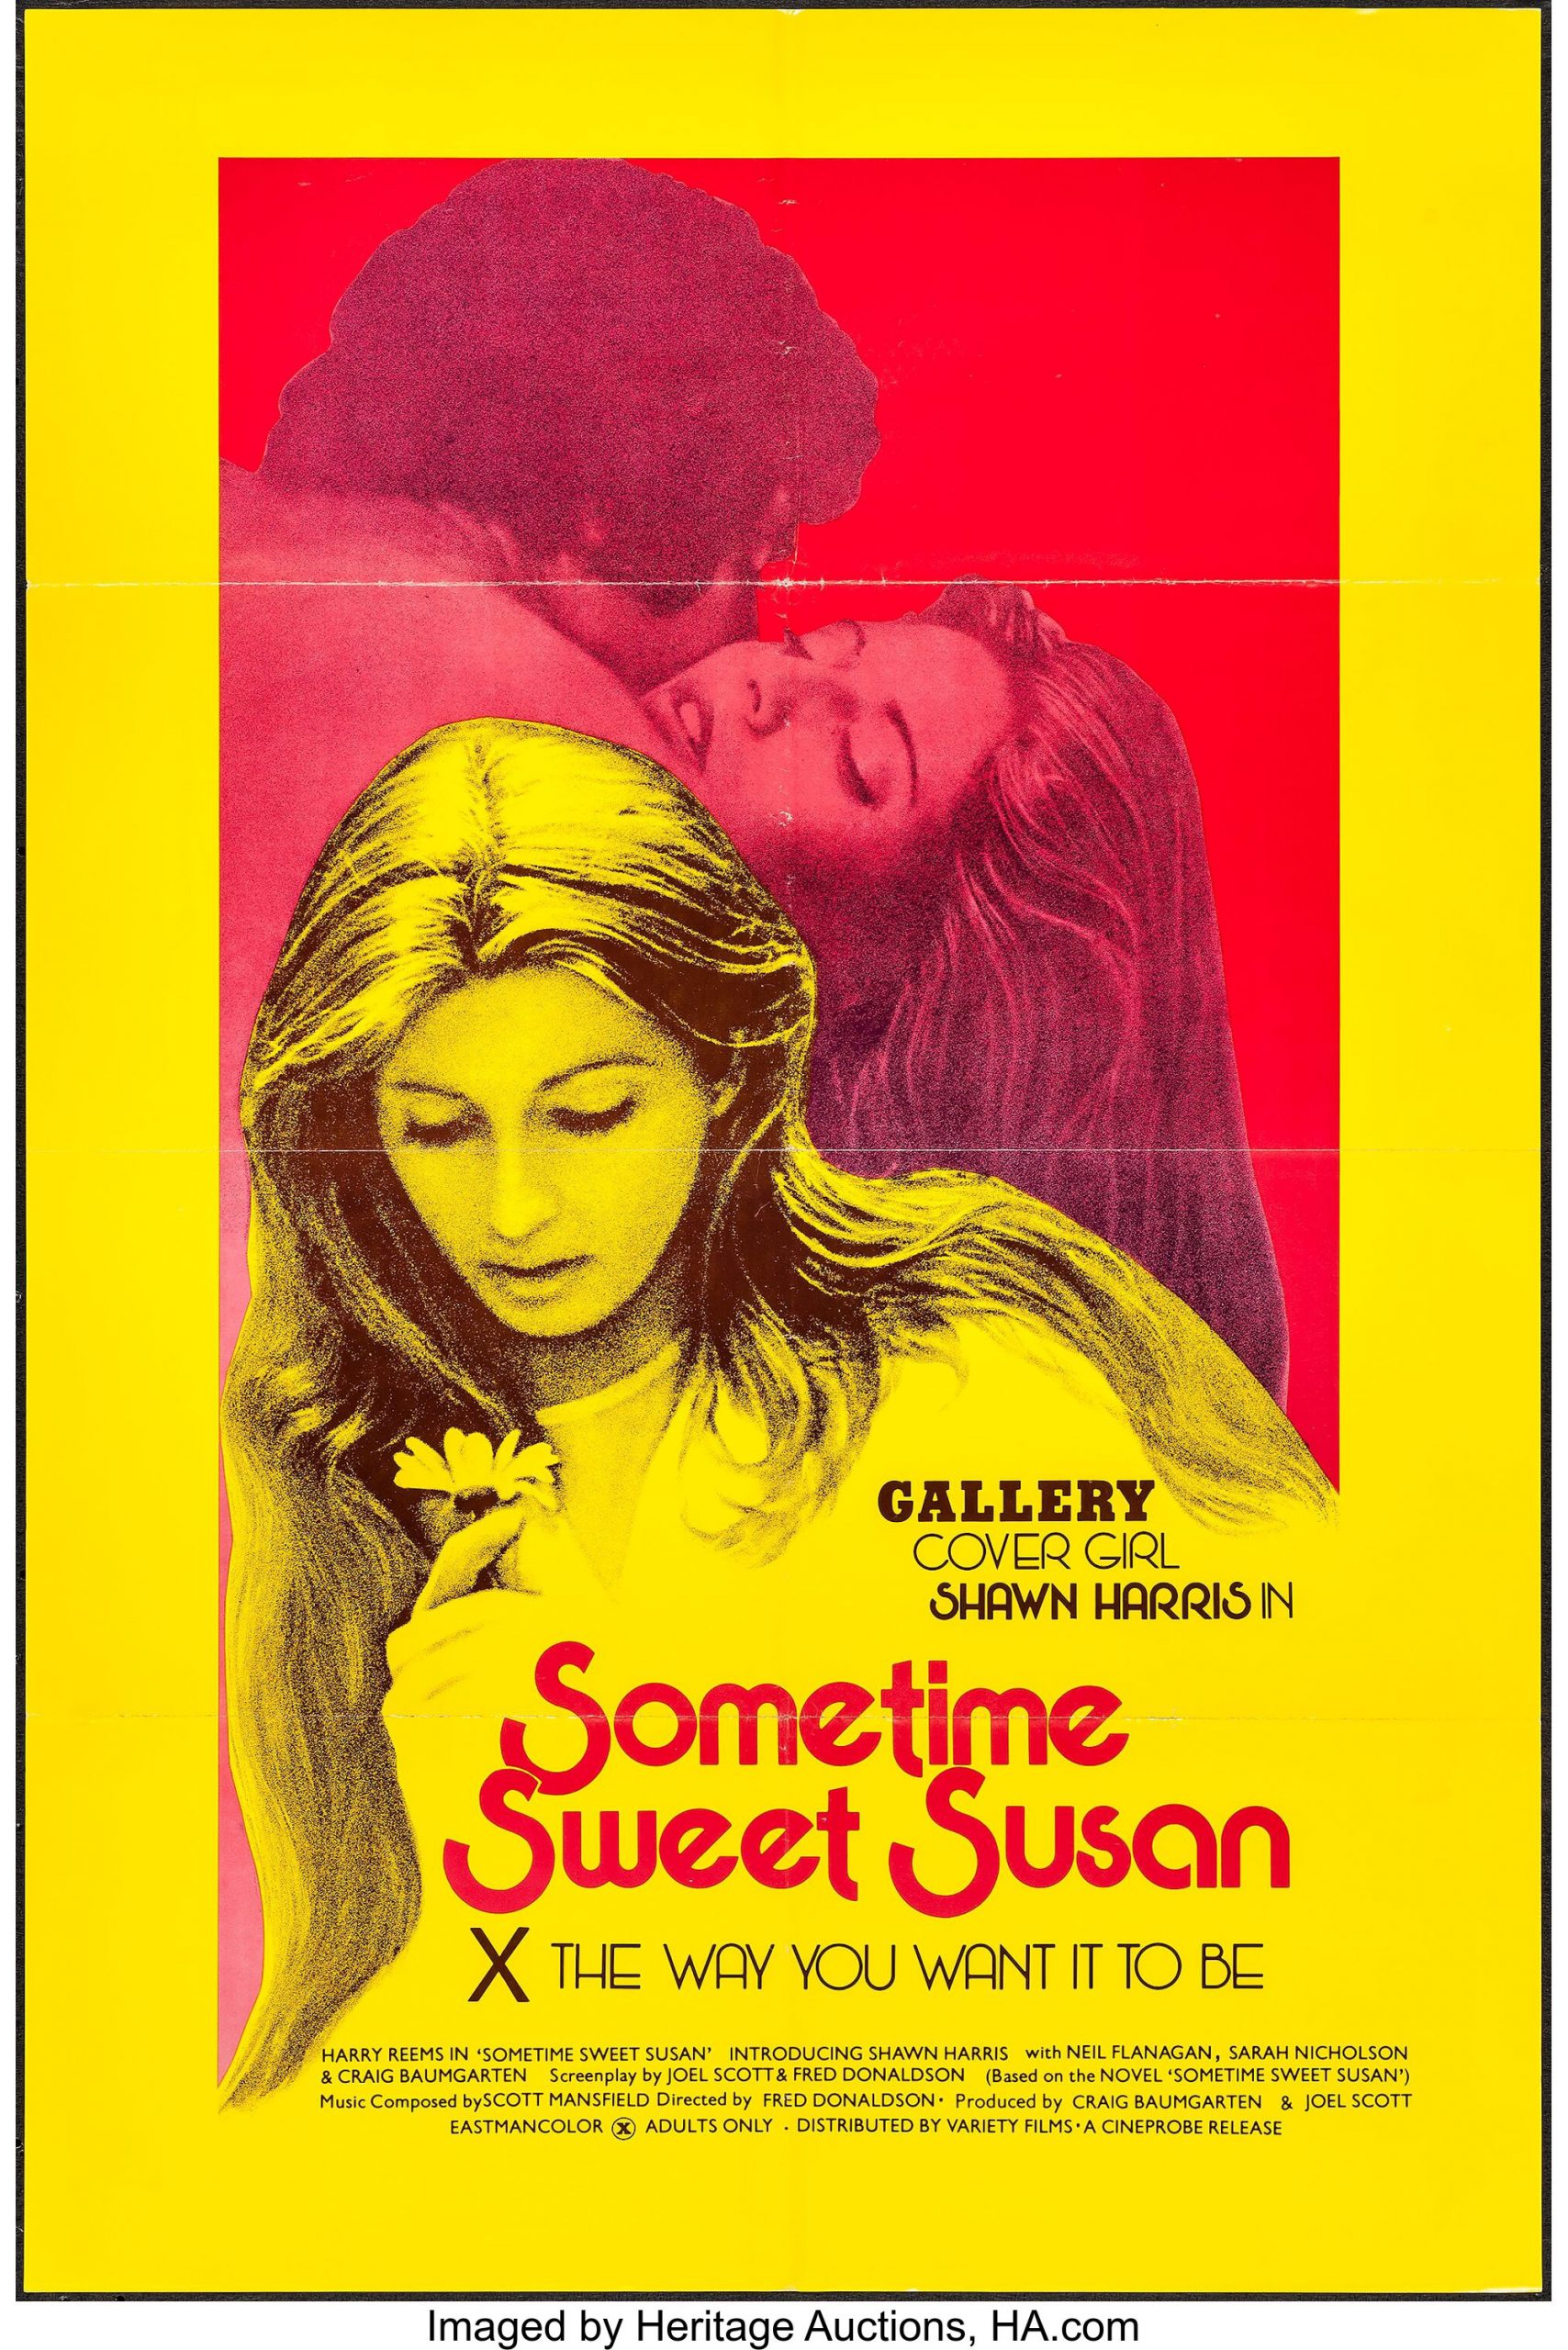 Sometime Sweet Susan (1975) - Original Poster - vintagepornfun.com